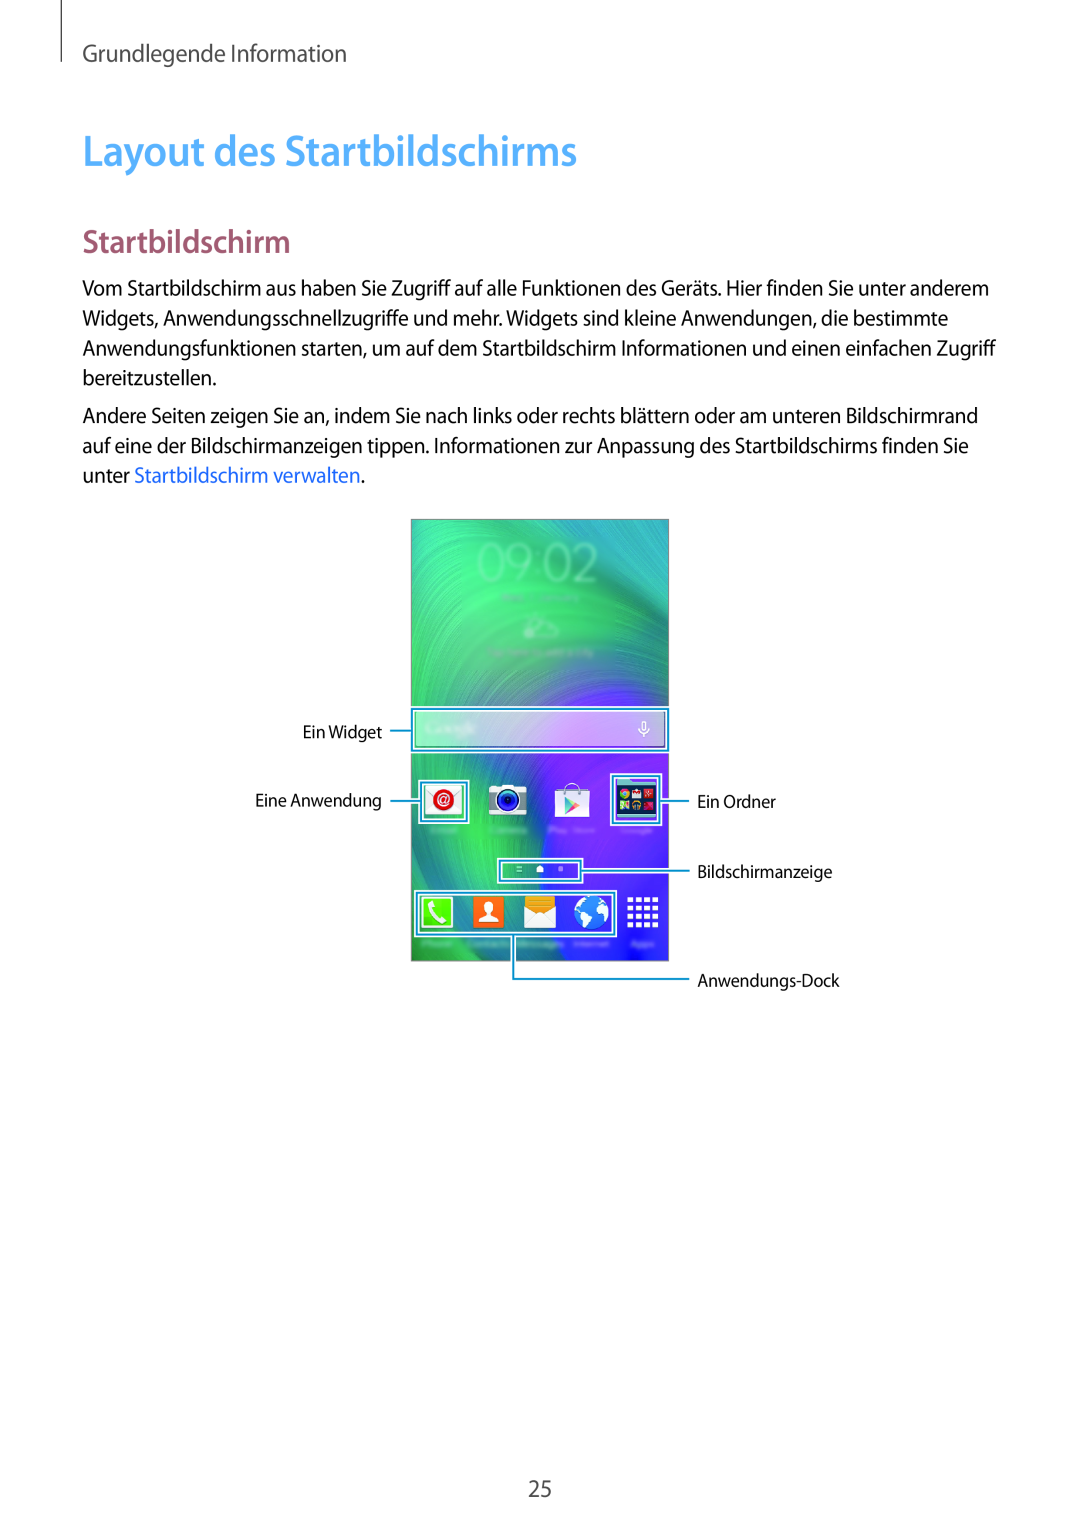 Samsung SM-A500FZWUVIA, SM-A500FZWUPRT, SM-A500FZWUDDE, SM-A500FZWUATO Layout des Startbildschirms, Grundlegende Information 